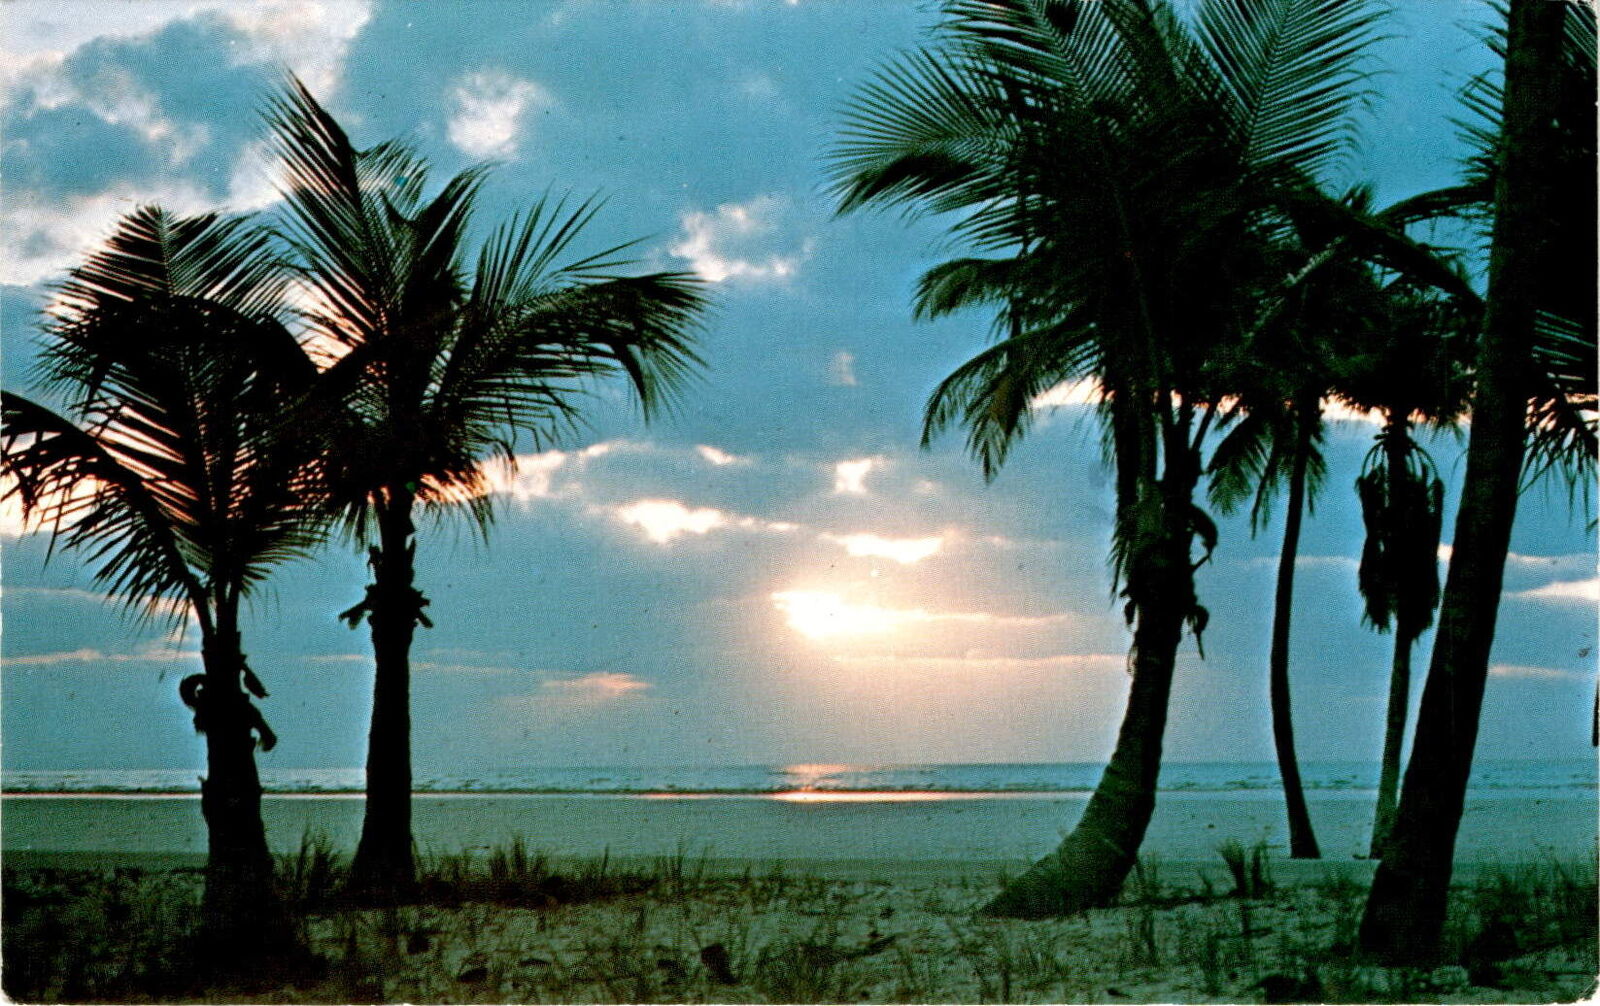 Postcard, Florida, palm trees, sunrise, ocean, warm weather, rain, Postcard